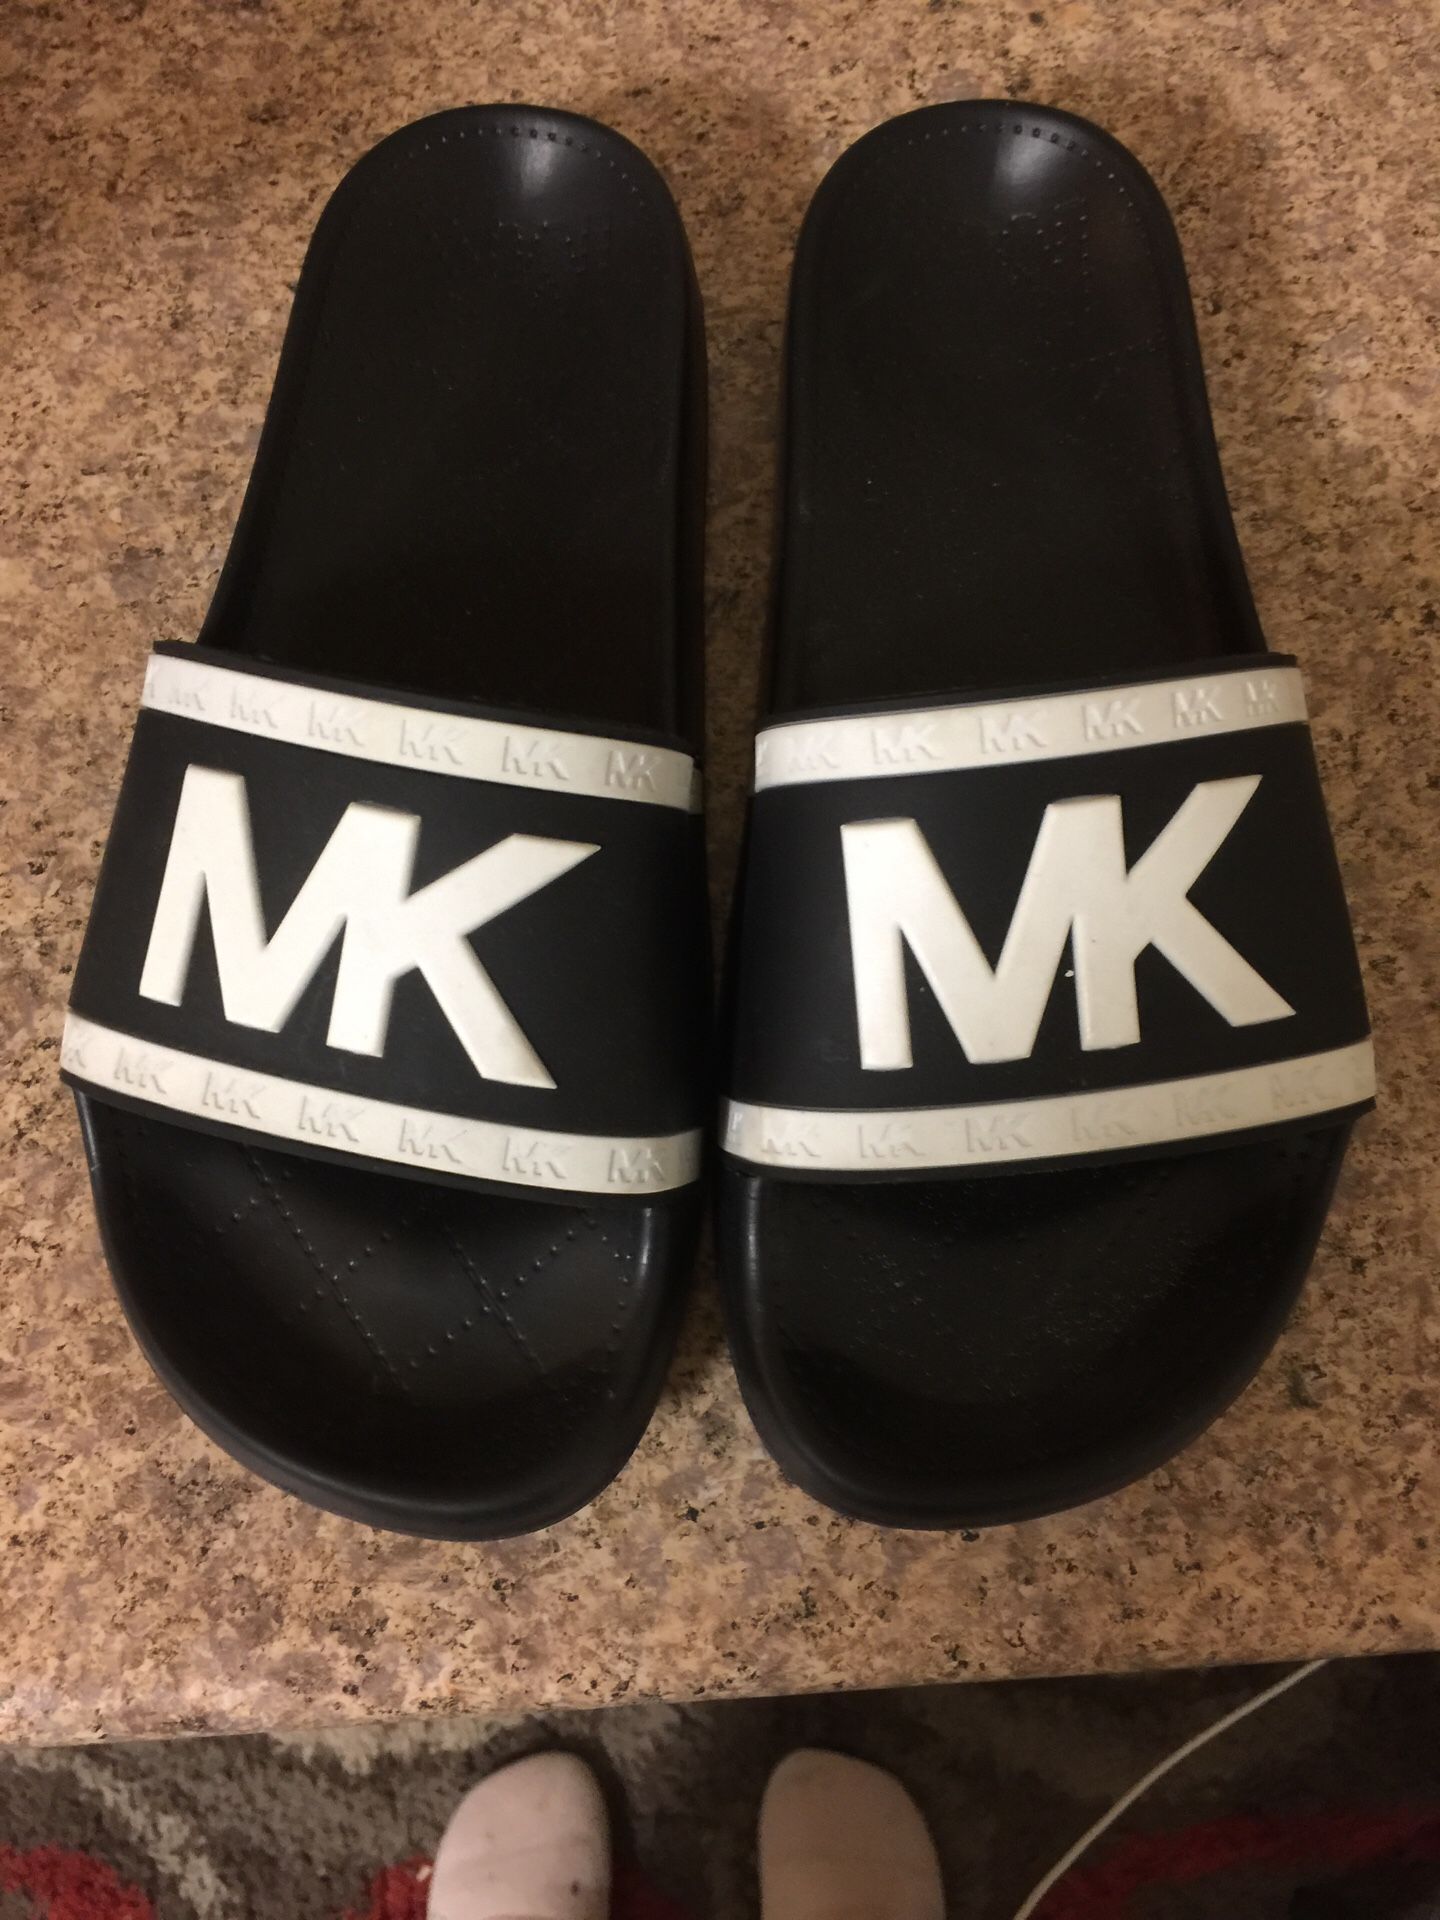 Michael Kors black and white sandals